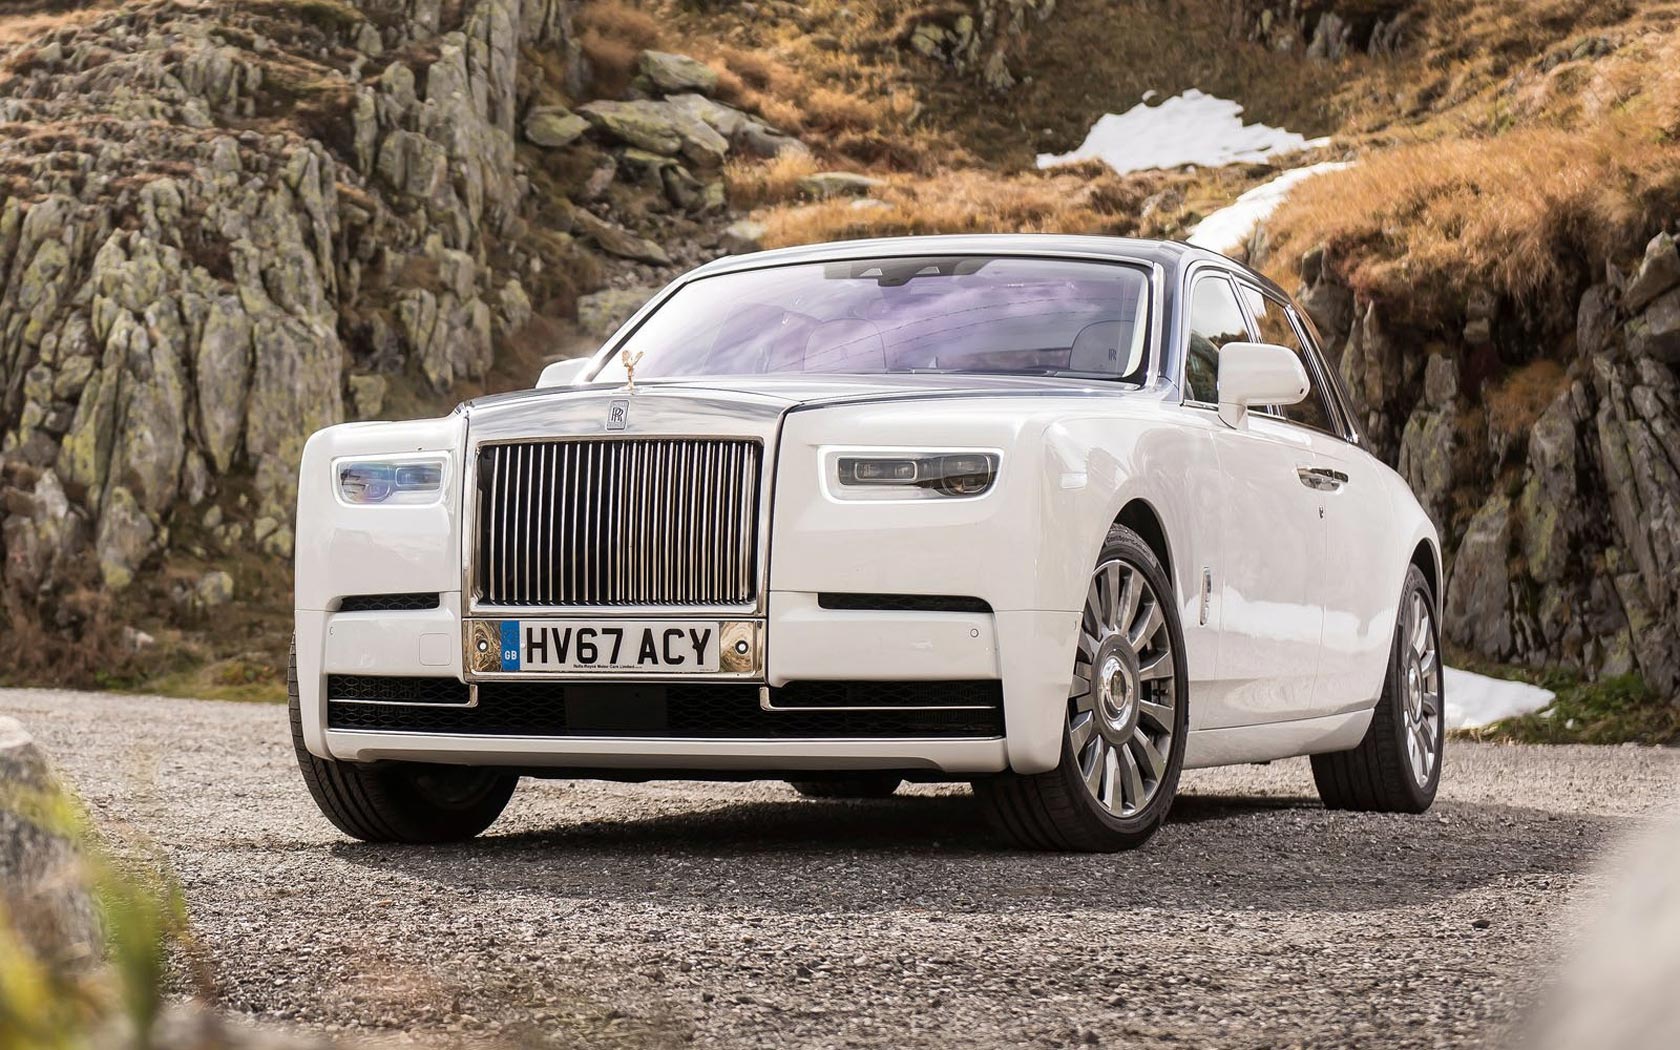  Rolls-Royce Phantom 